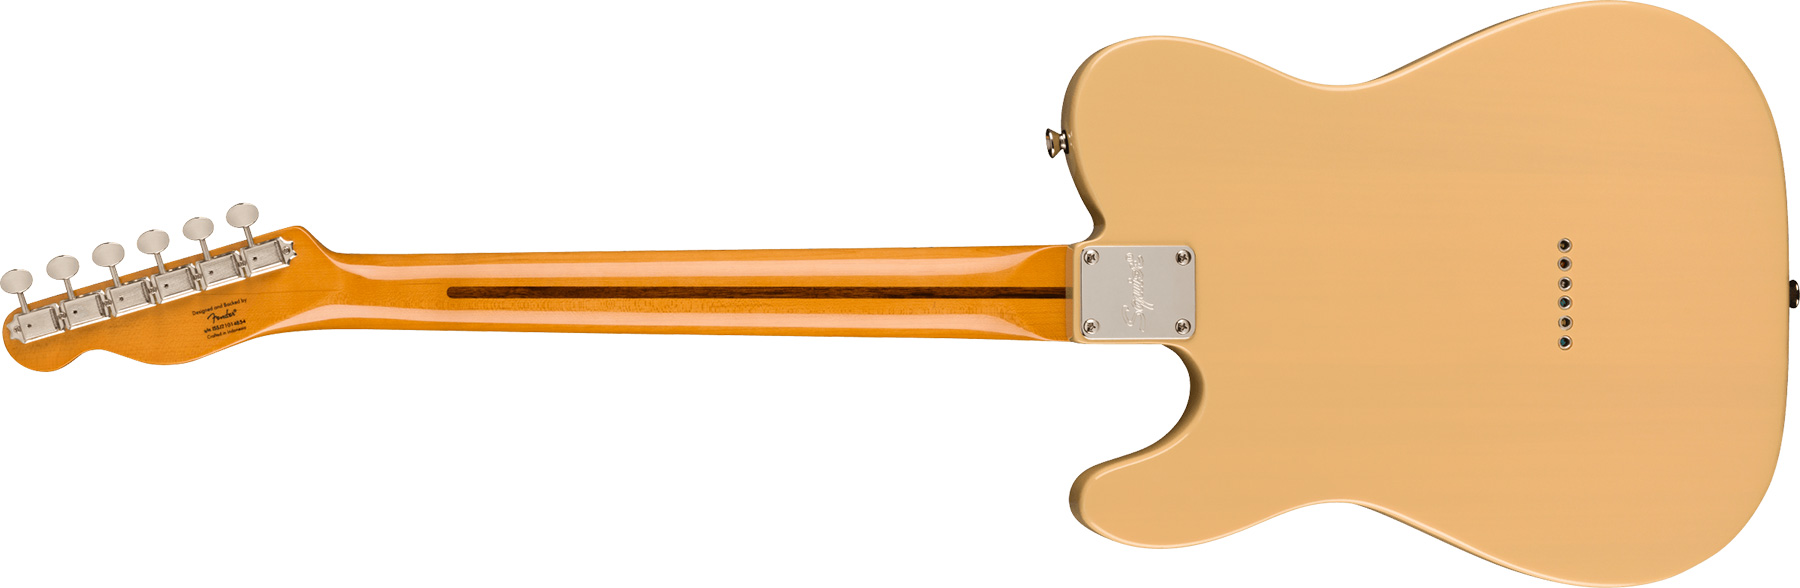 Squier Tele '50s Parchment Pickguard Classic Vibe Fsr 2s Ht Mn - Vintage Blonde - Televorm elektrische gitaar - Variation 1